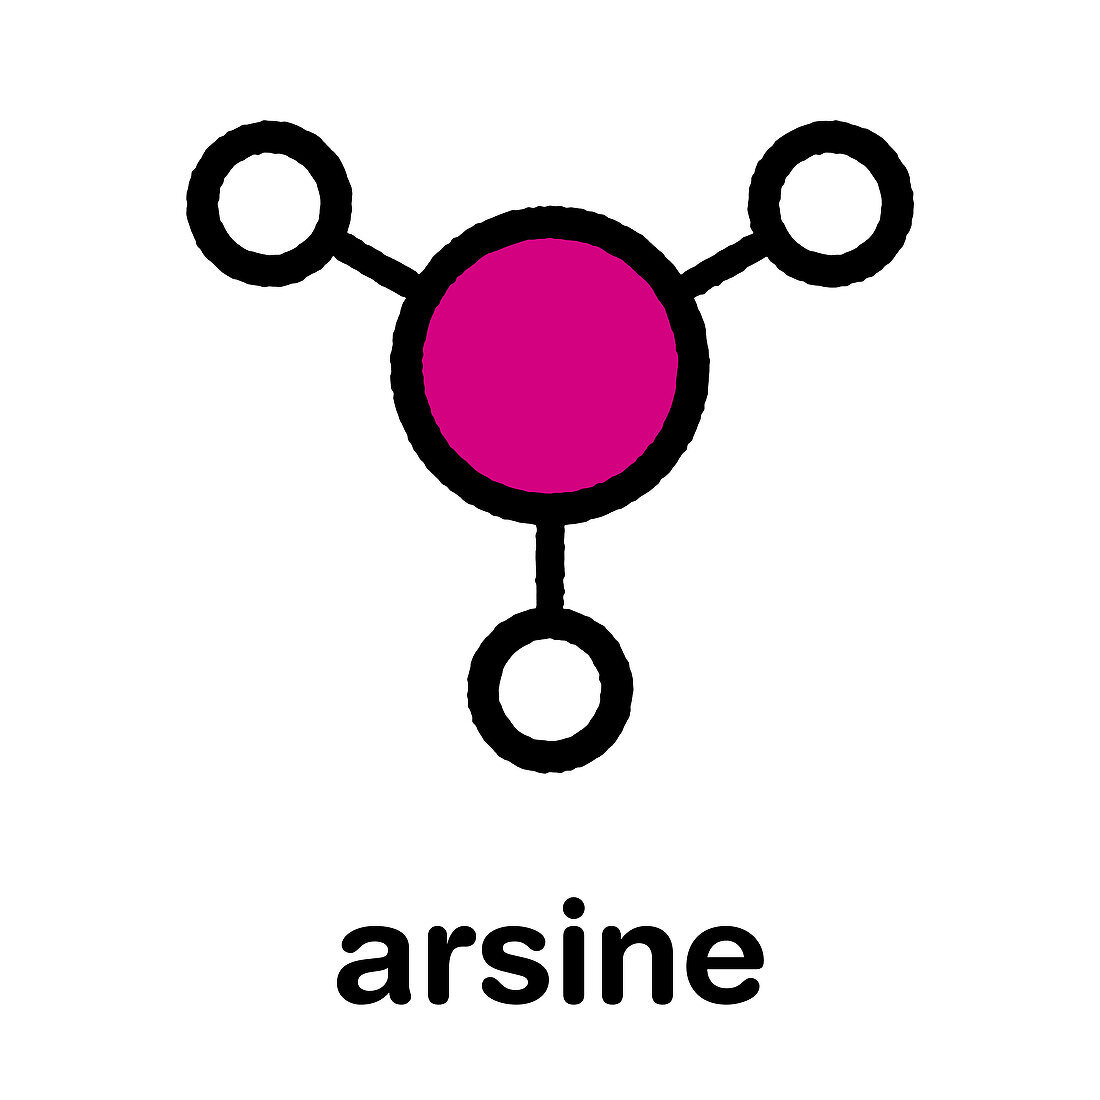 Arsine molecule